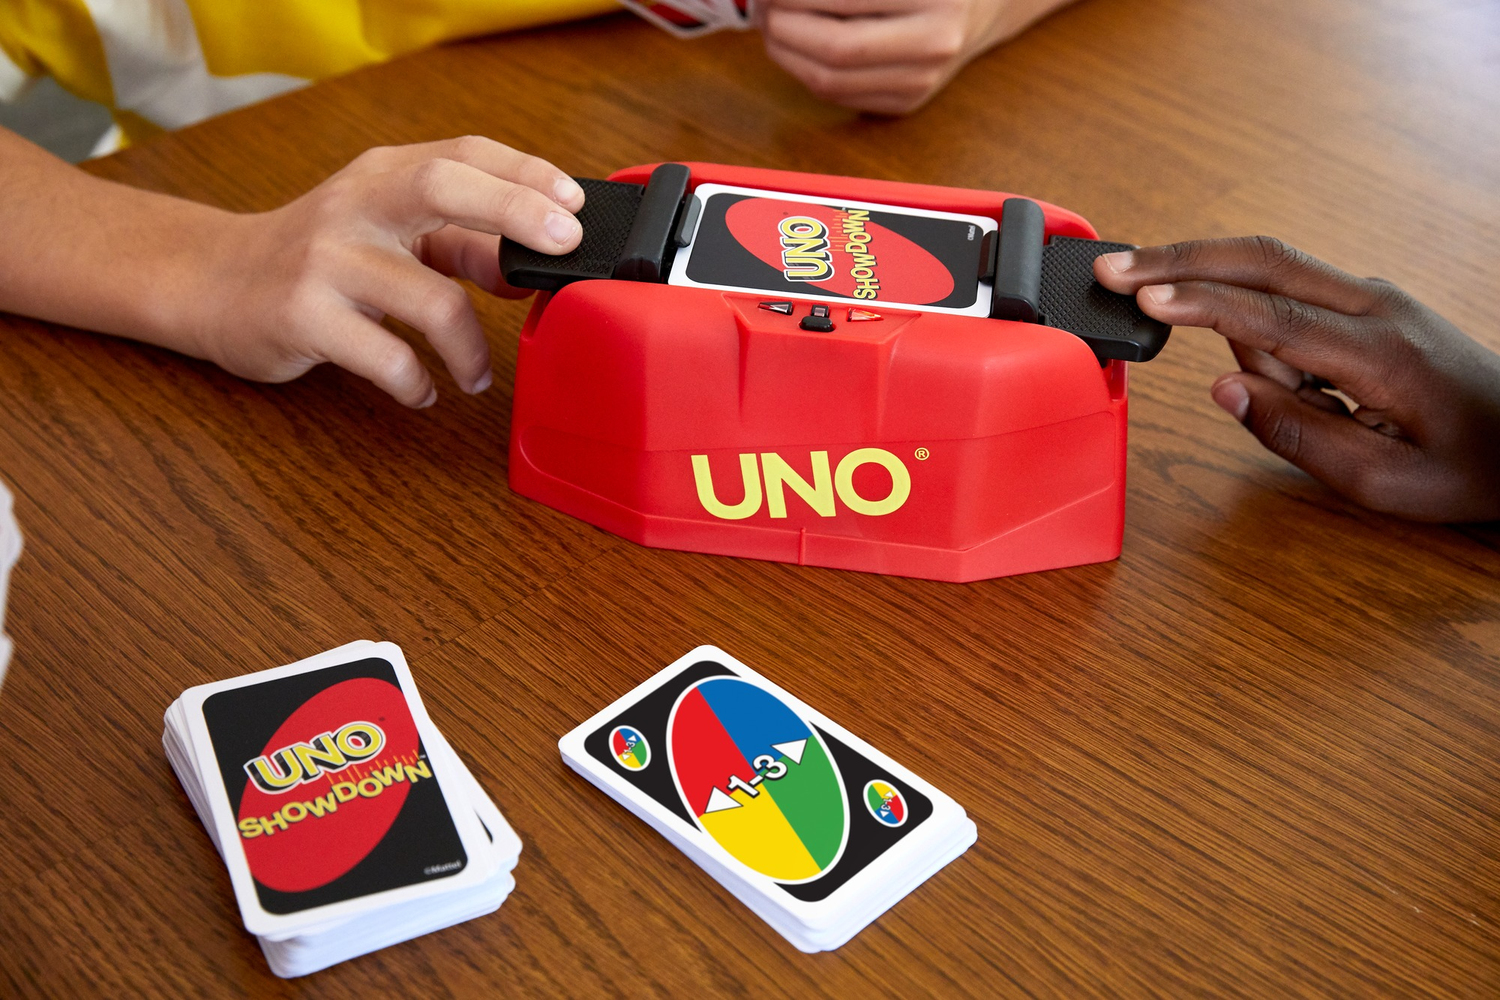 UNO Showdown Card Game Shedding - Imagine That Toys